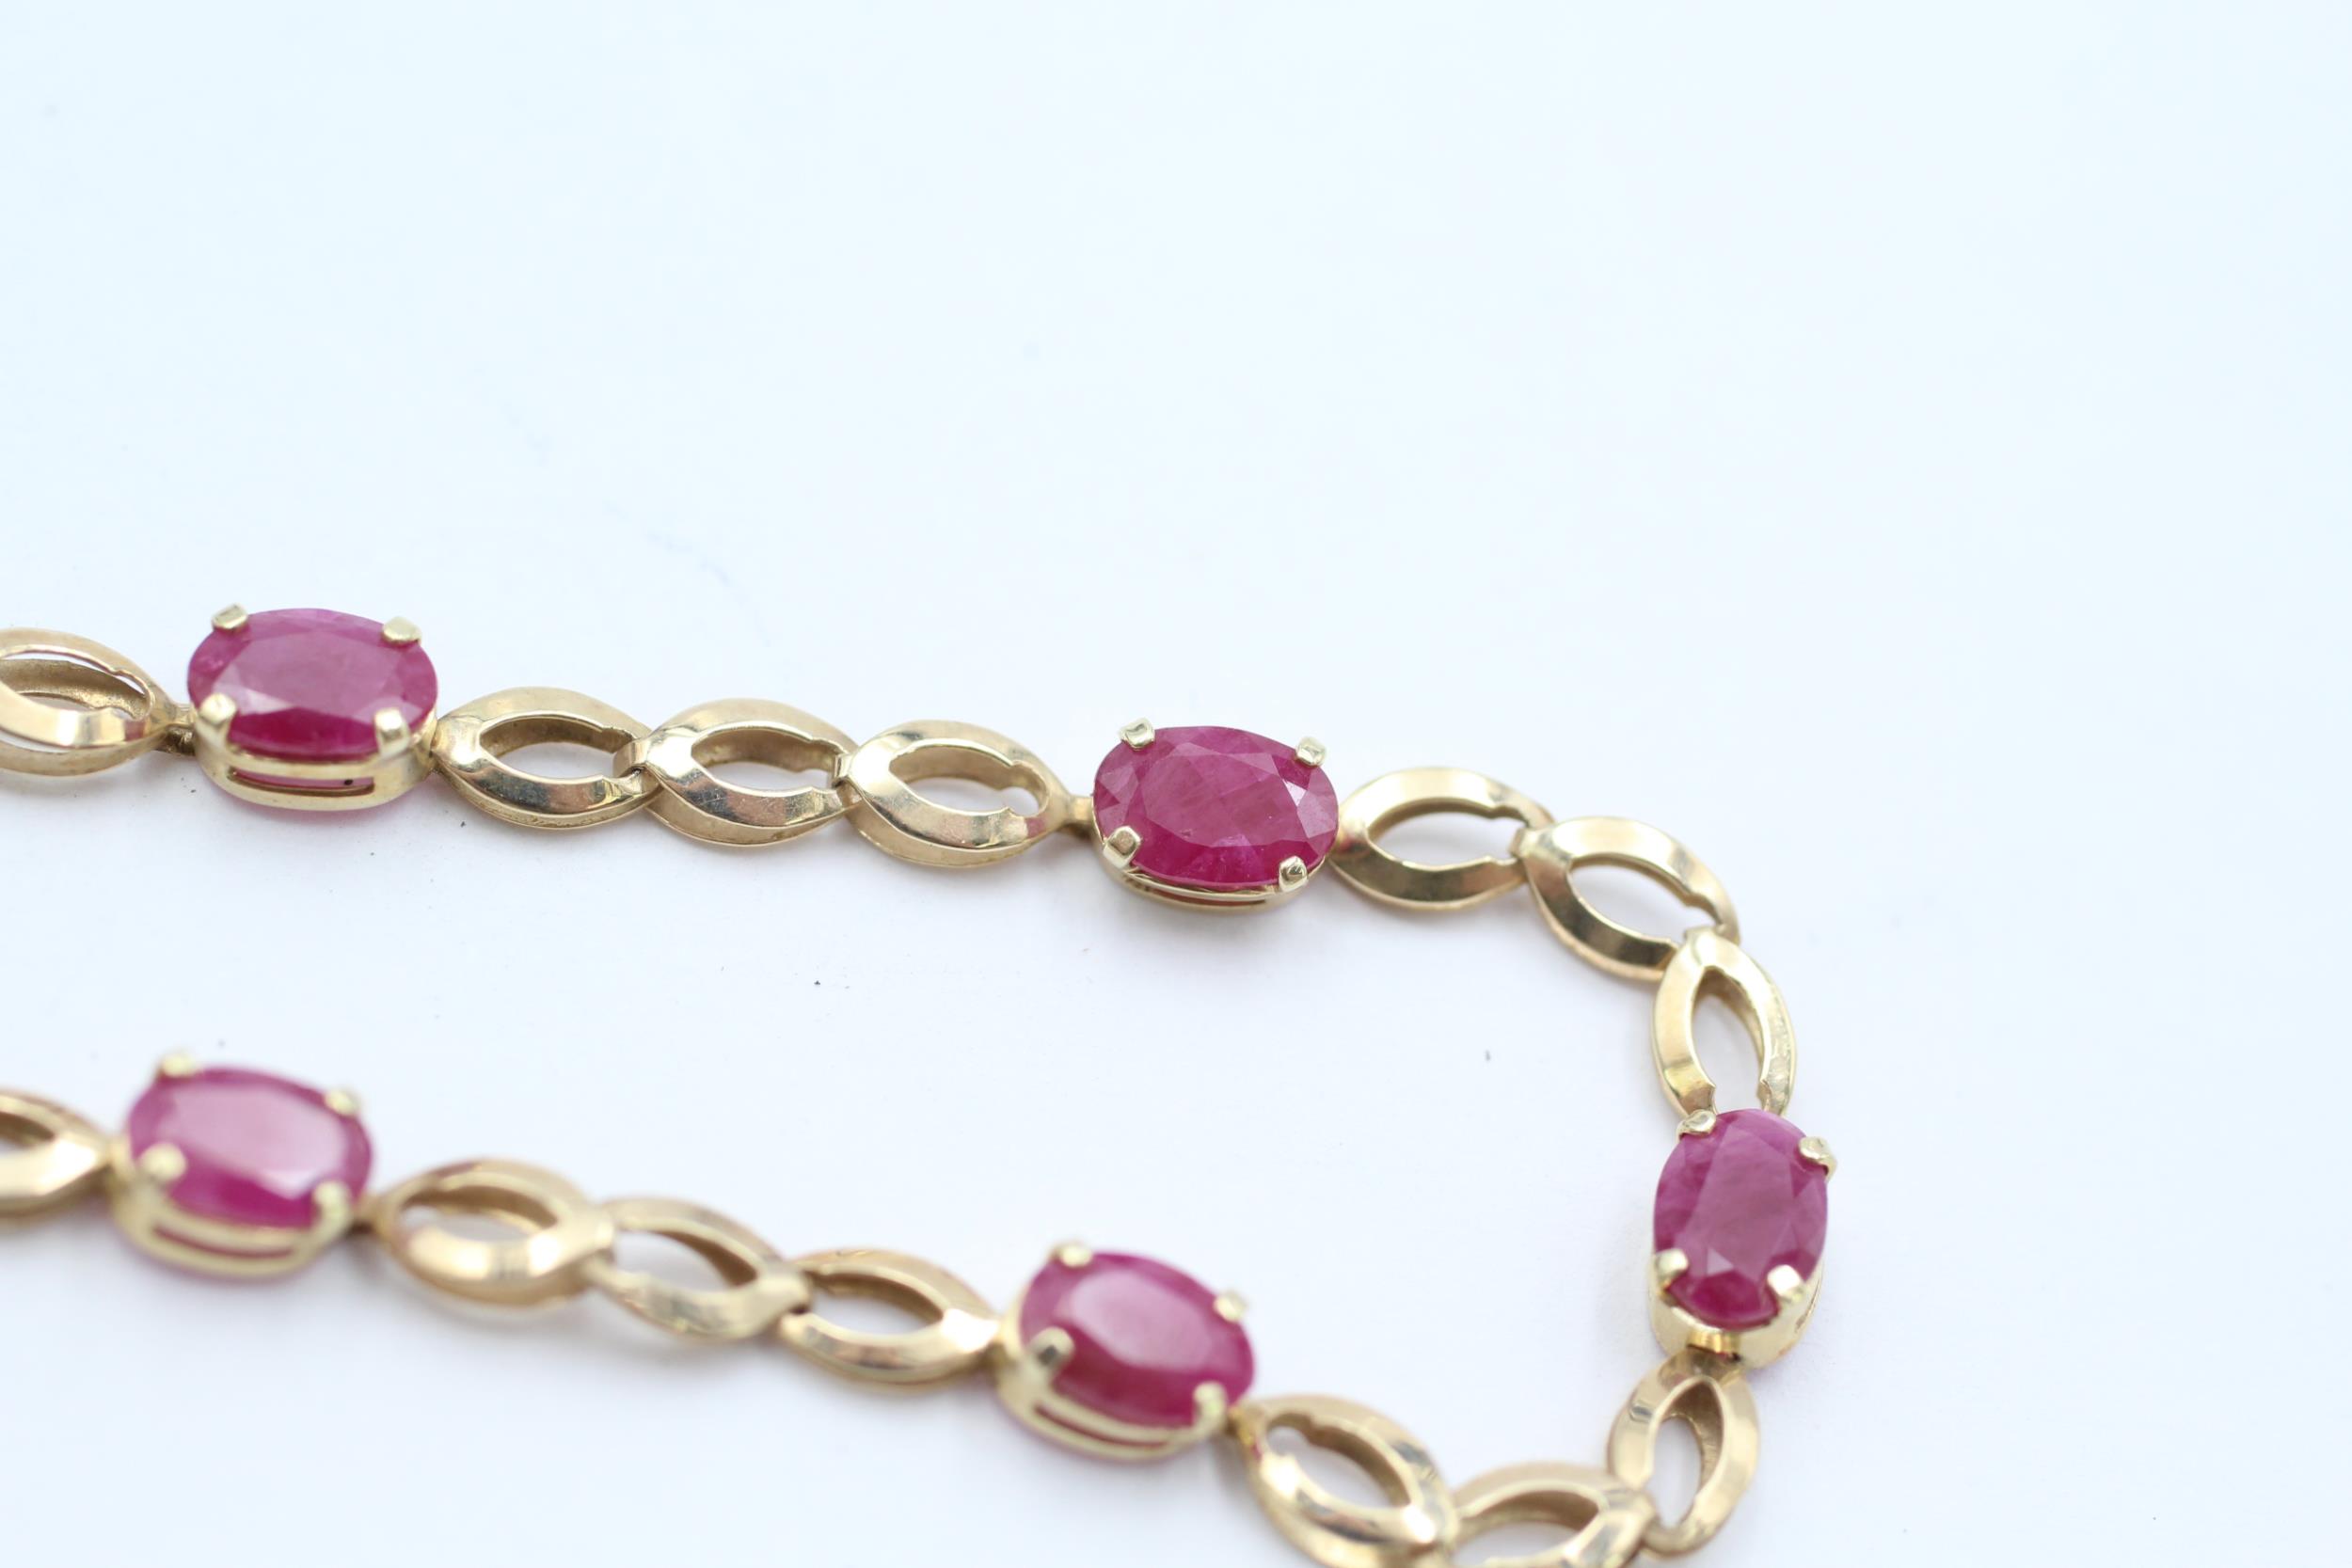 10ct gold ruby bracelet - 2.8 g - Image 3 of 5